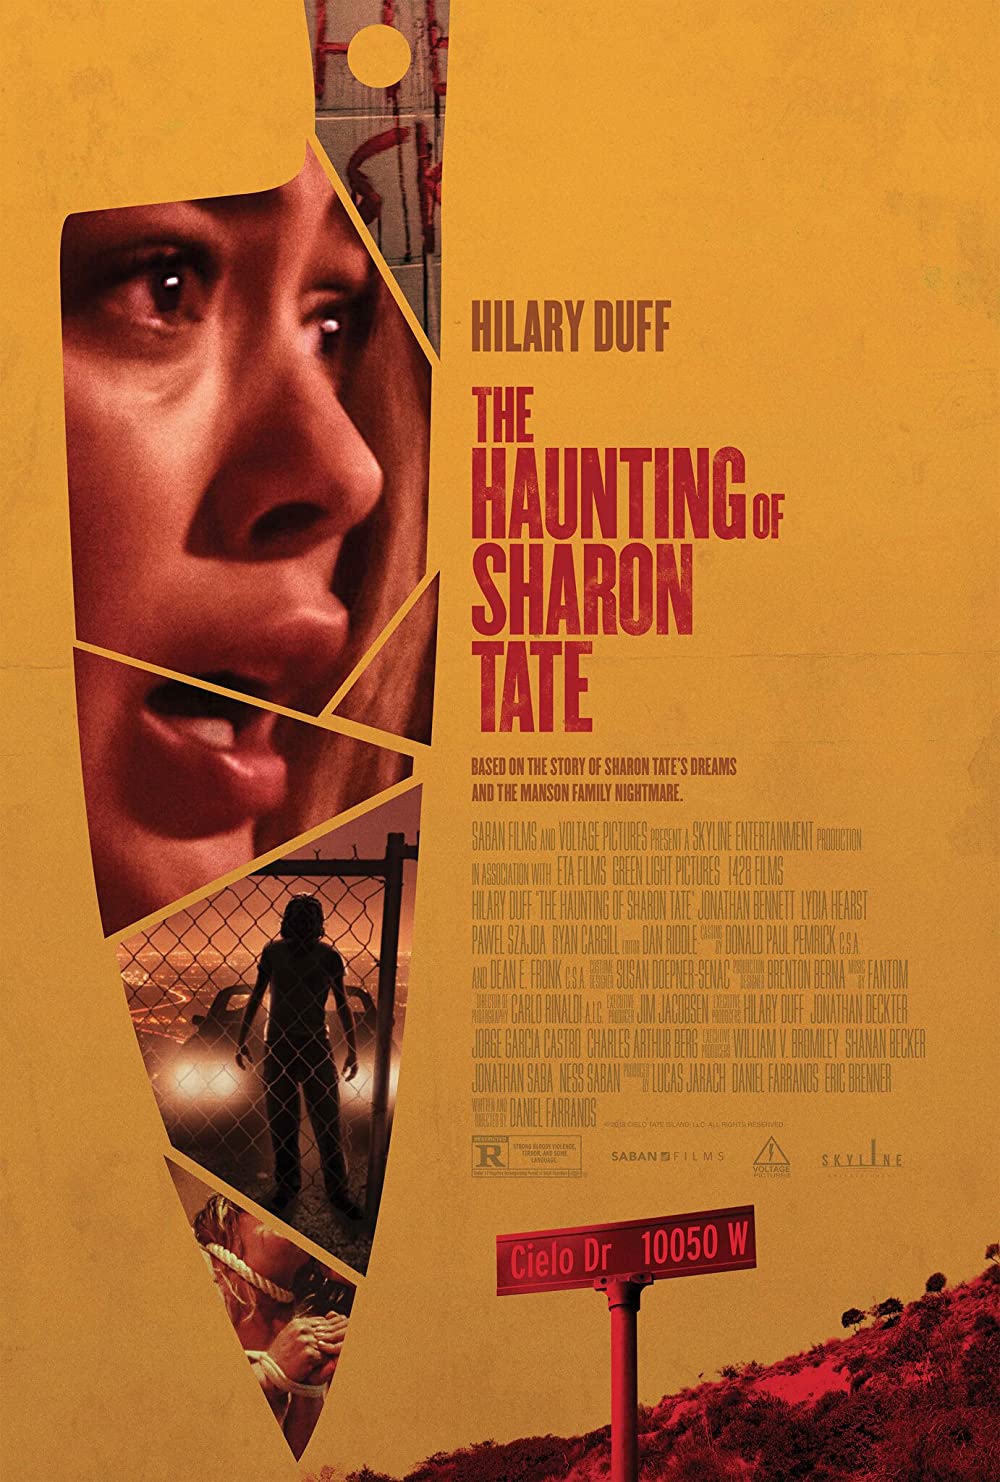 Filmbeschreibung zu The Haunting of Sharon Tate